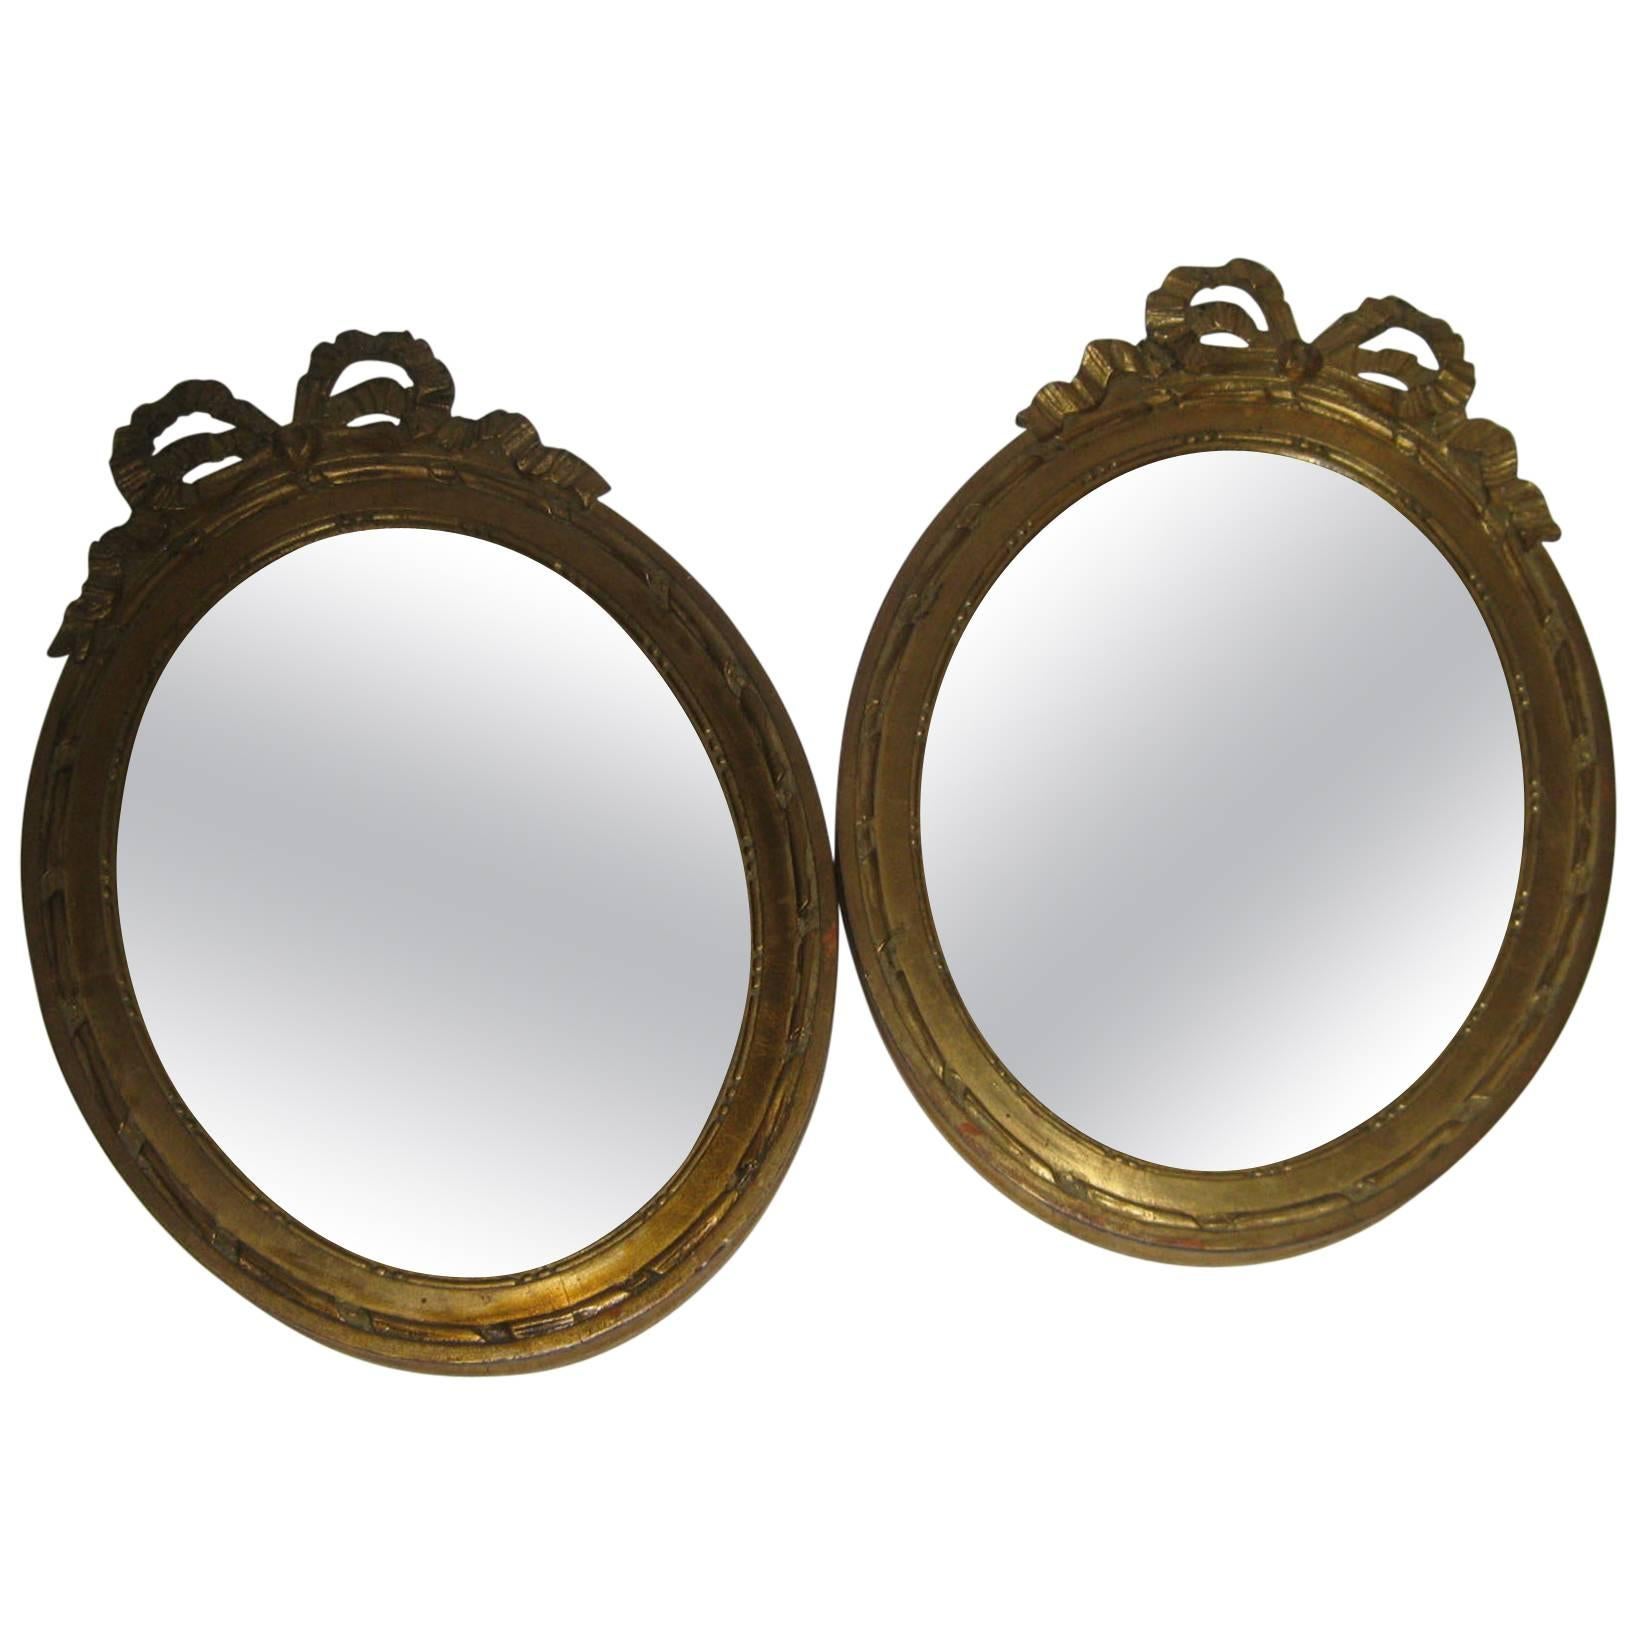 19th century Napoleon III Petite French Giltwood Mirror Pair